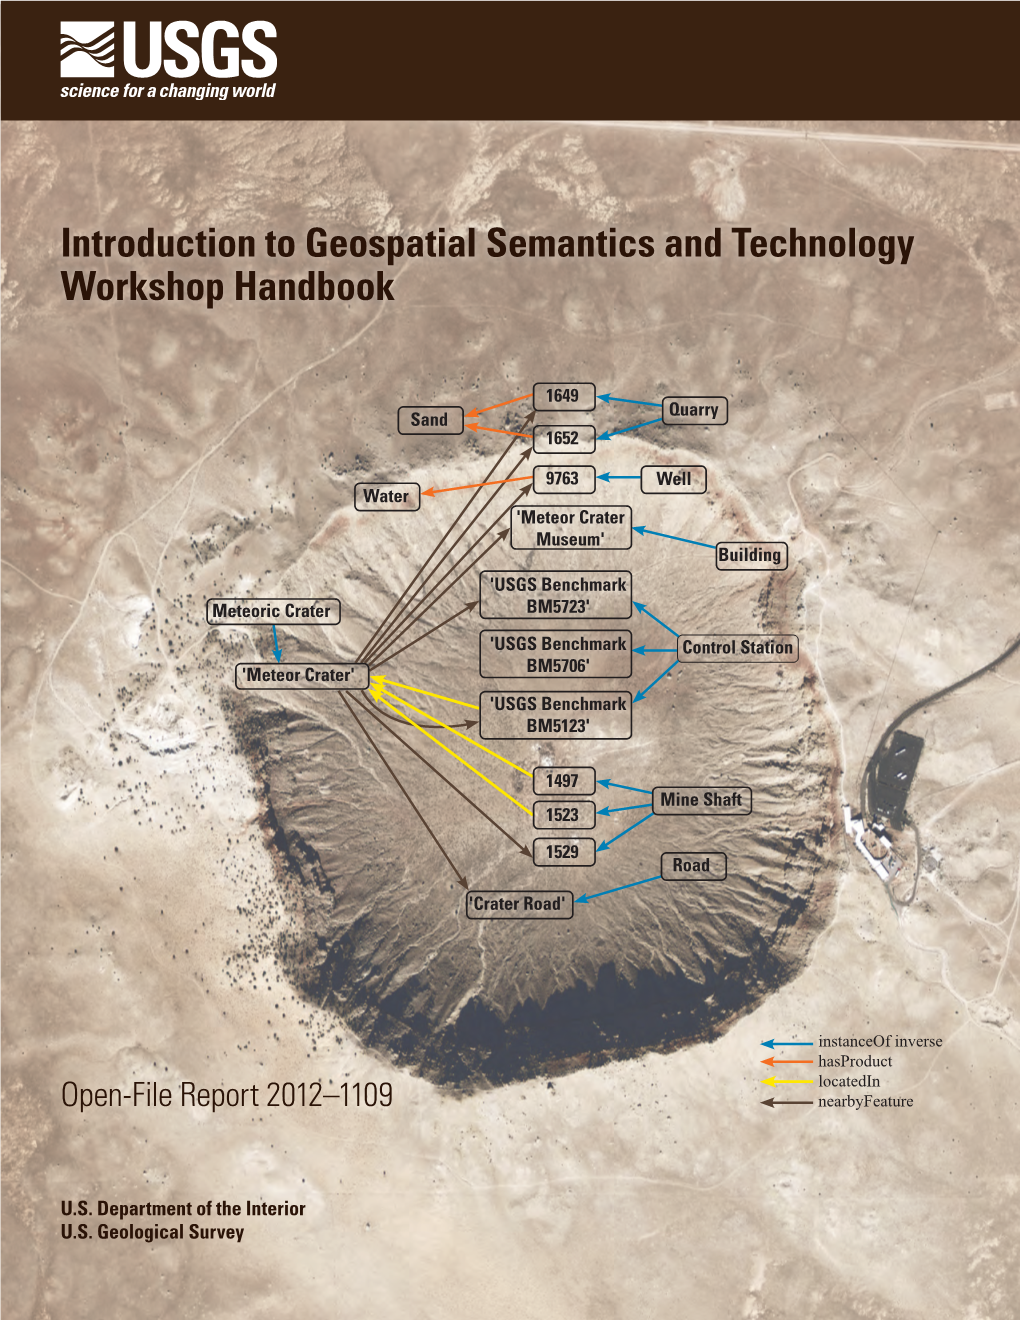 Introduction to Geospatial Semantics and Technology Workshop Handbook